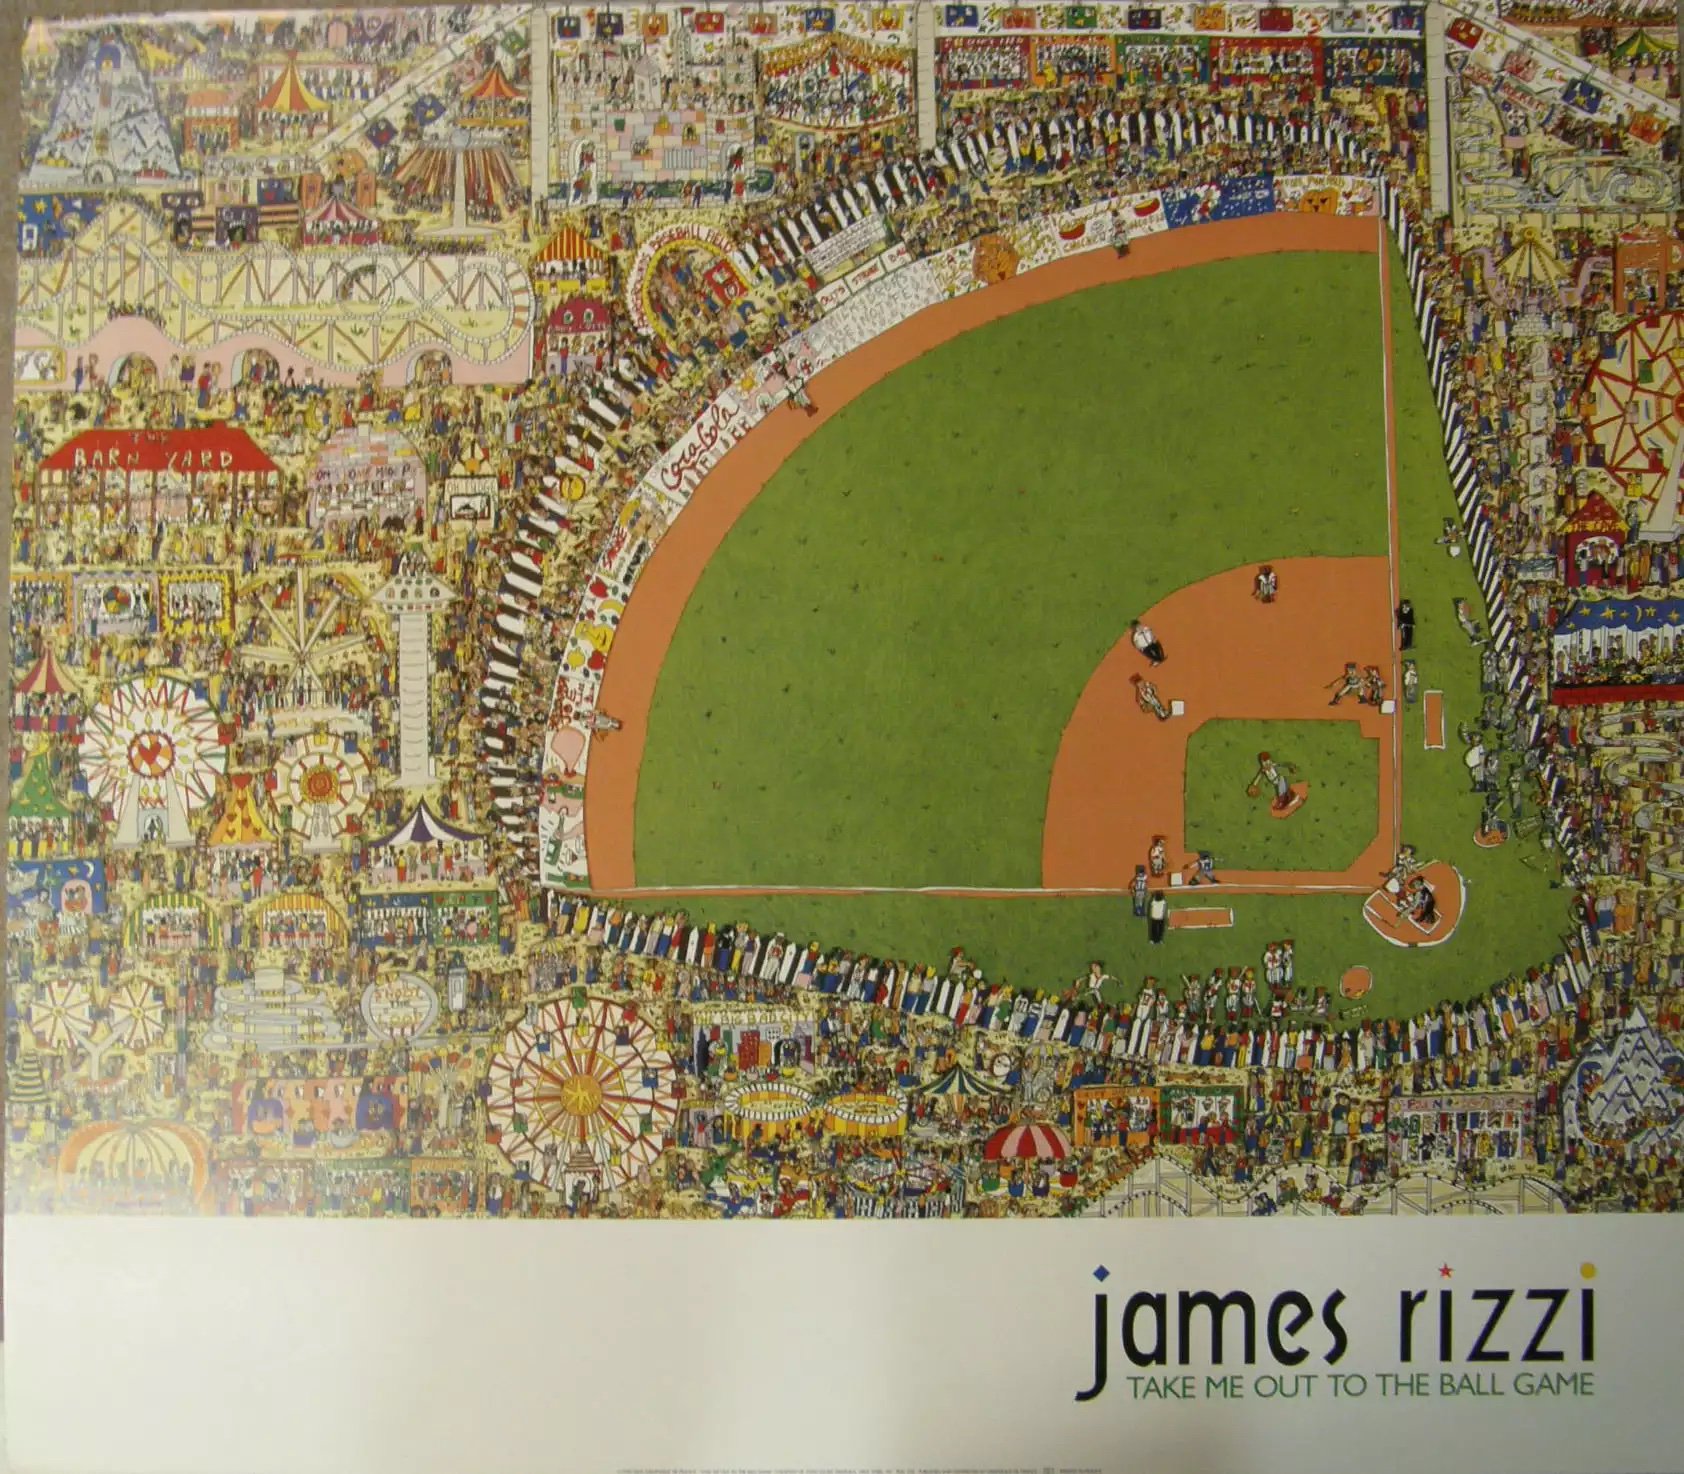 Xx'x x xxxxxx. Twitter: "Here's the James Rizzi ballpark print from apartment. https://t.co/4n2OLG6ayt / X